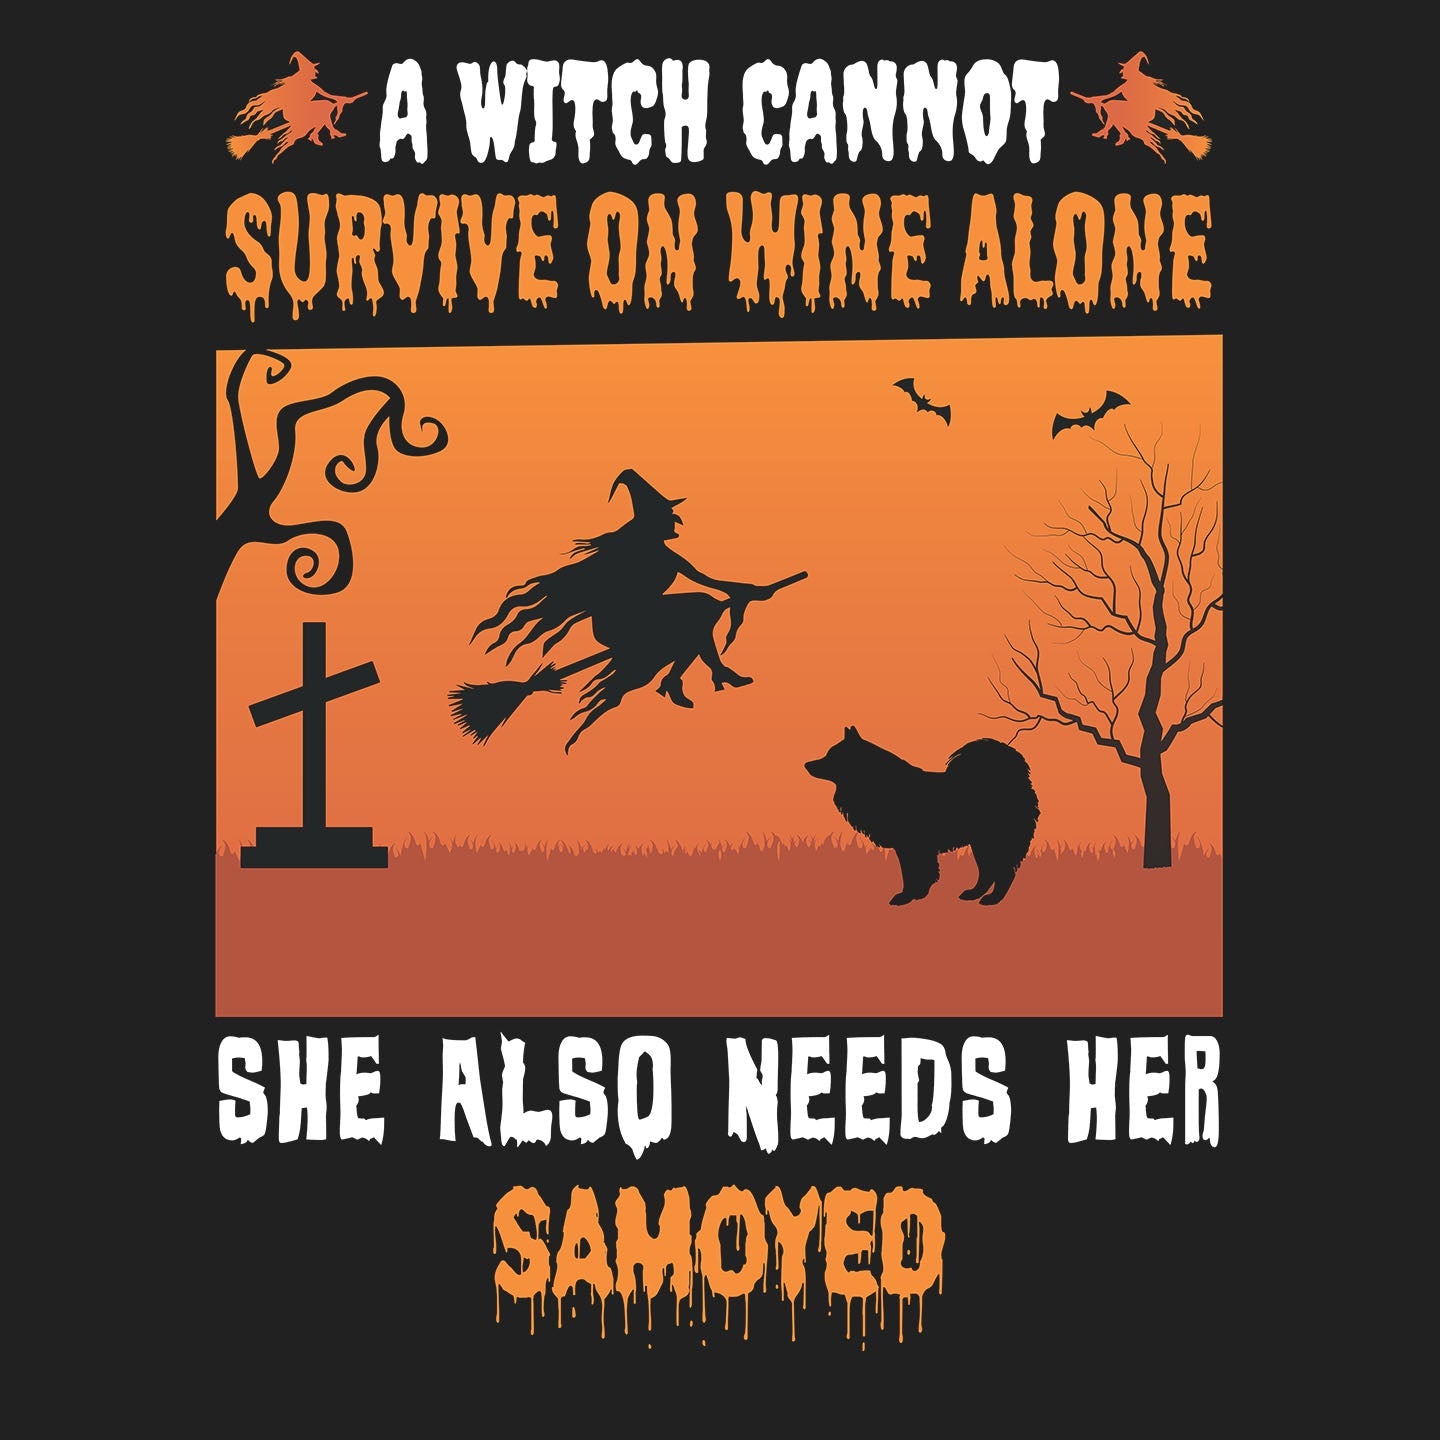 A Witch Needs Her Samoyed - Adult Unisex Crewneck Sweatshirt